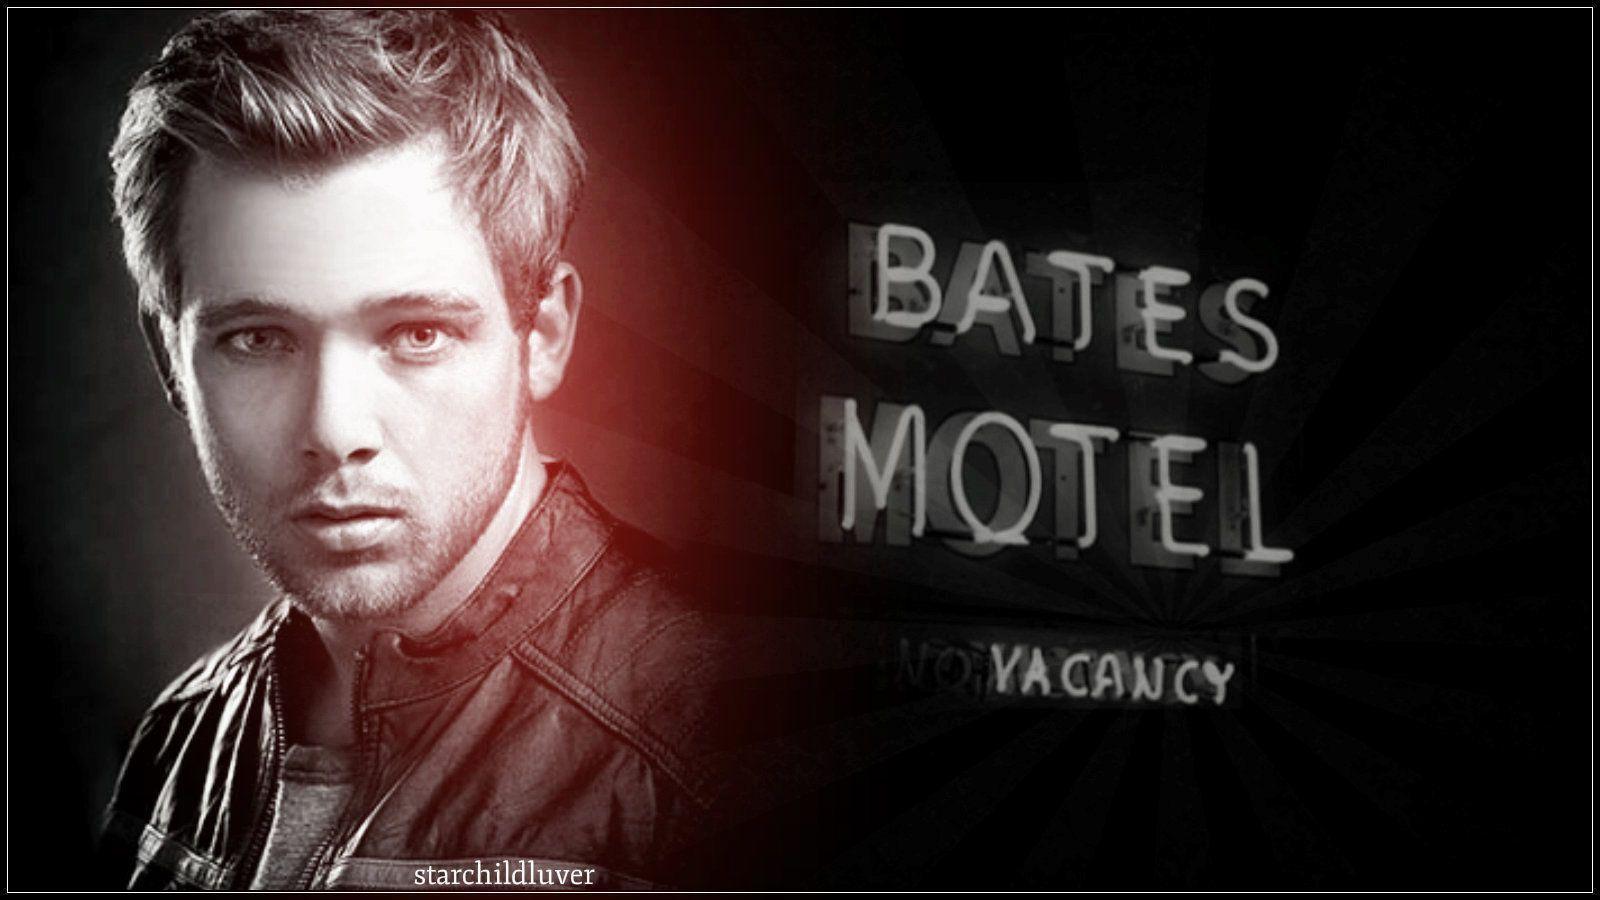 Bates Motel